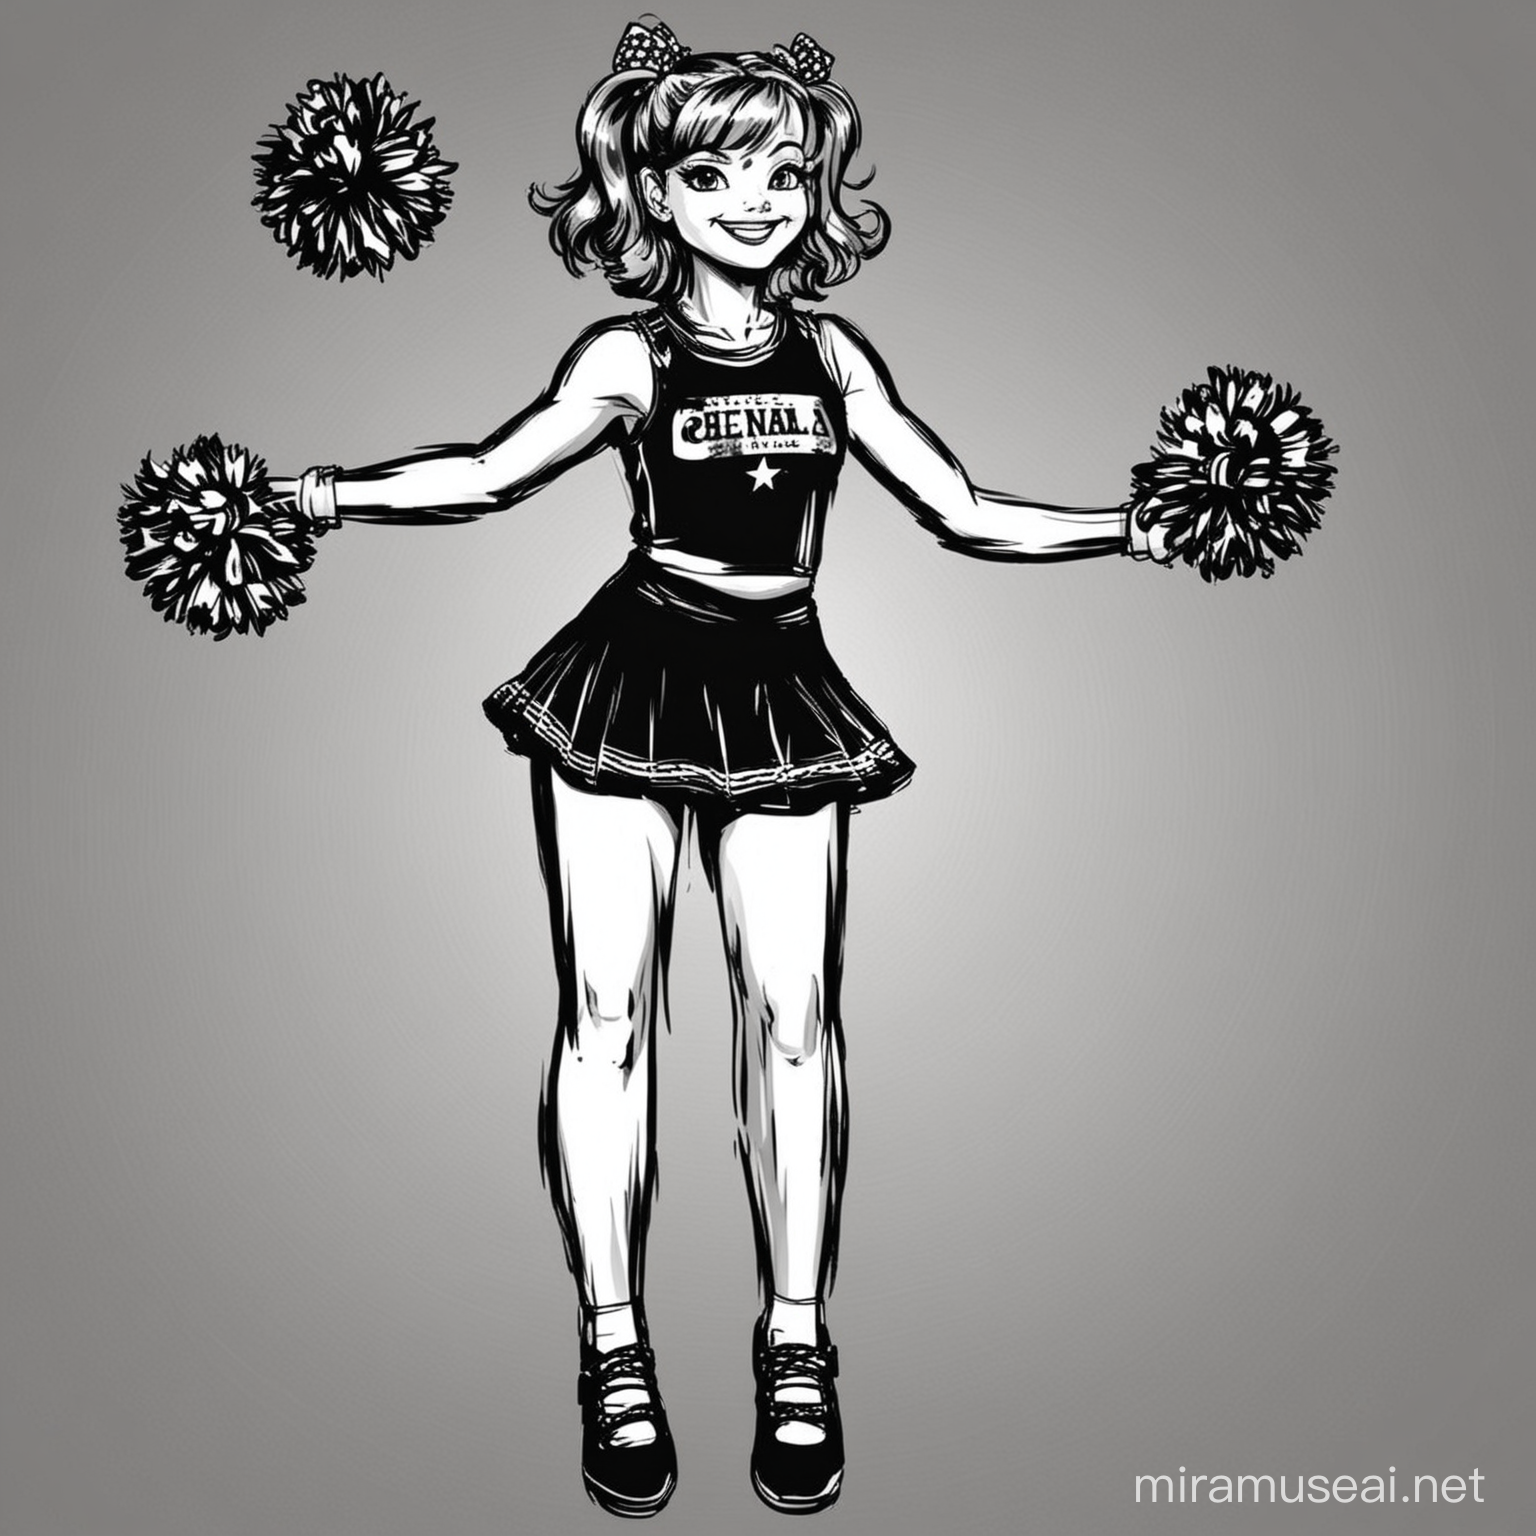 Dynamic Black and White Cheerleader Vector Illustration on White Background